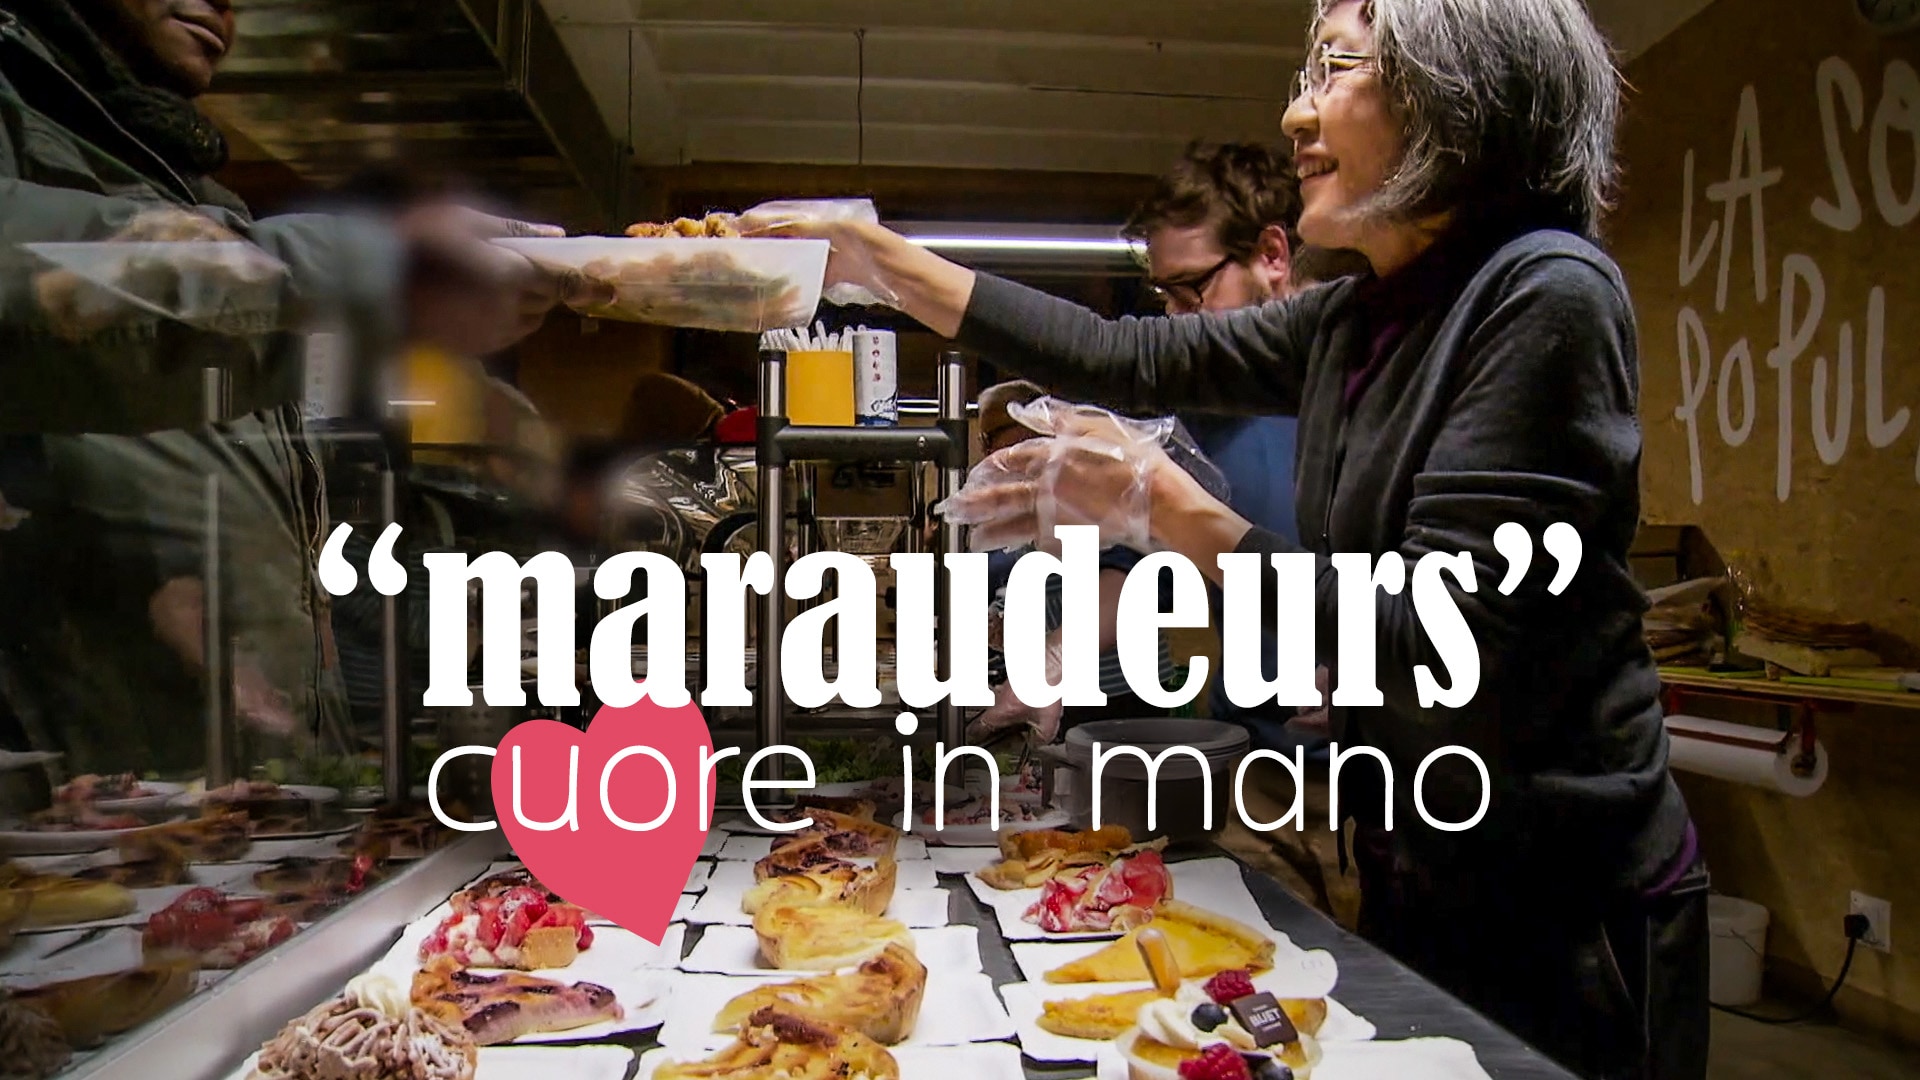 "Maraudeurs": cuore in mano